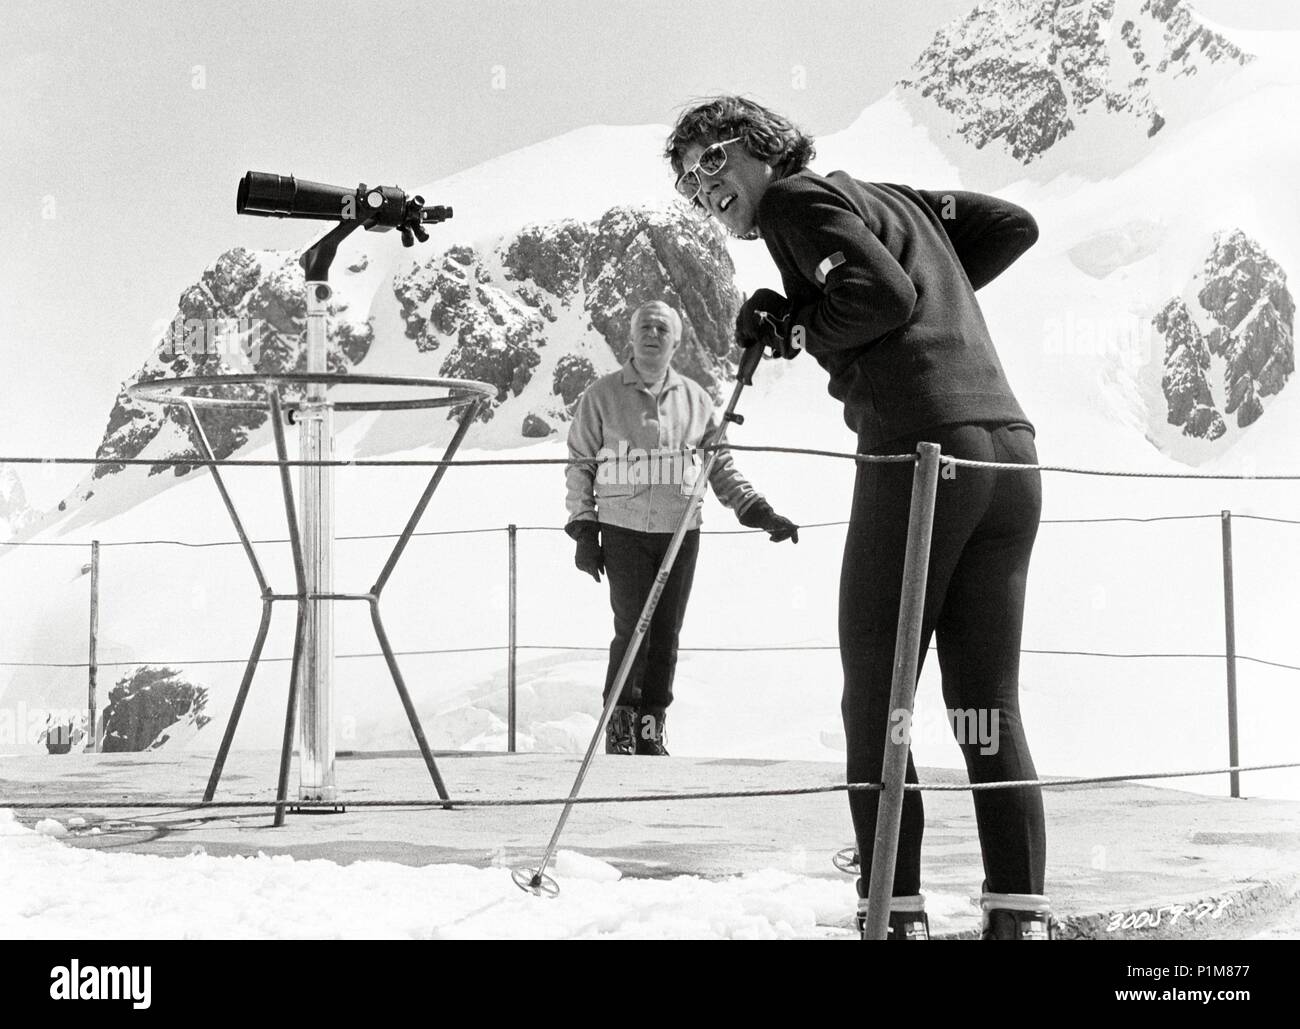 Original Film Title: SNOW JOB. English Title: SNOW JOB. Film Director:  GEORGE H. ENGLUND. Year: 1972. Stars: VITTORIO DE SICA; JEAN-CLAUDE KILLY.  Credit: WARNER BROTHERS / Album Stock Photo - Alamy